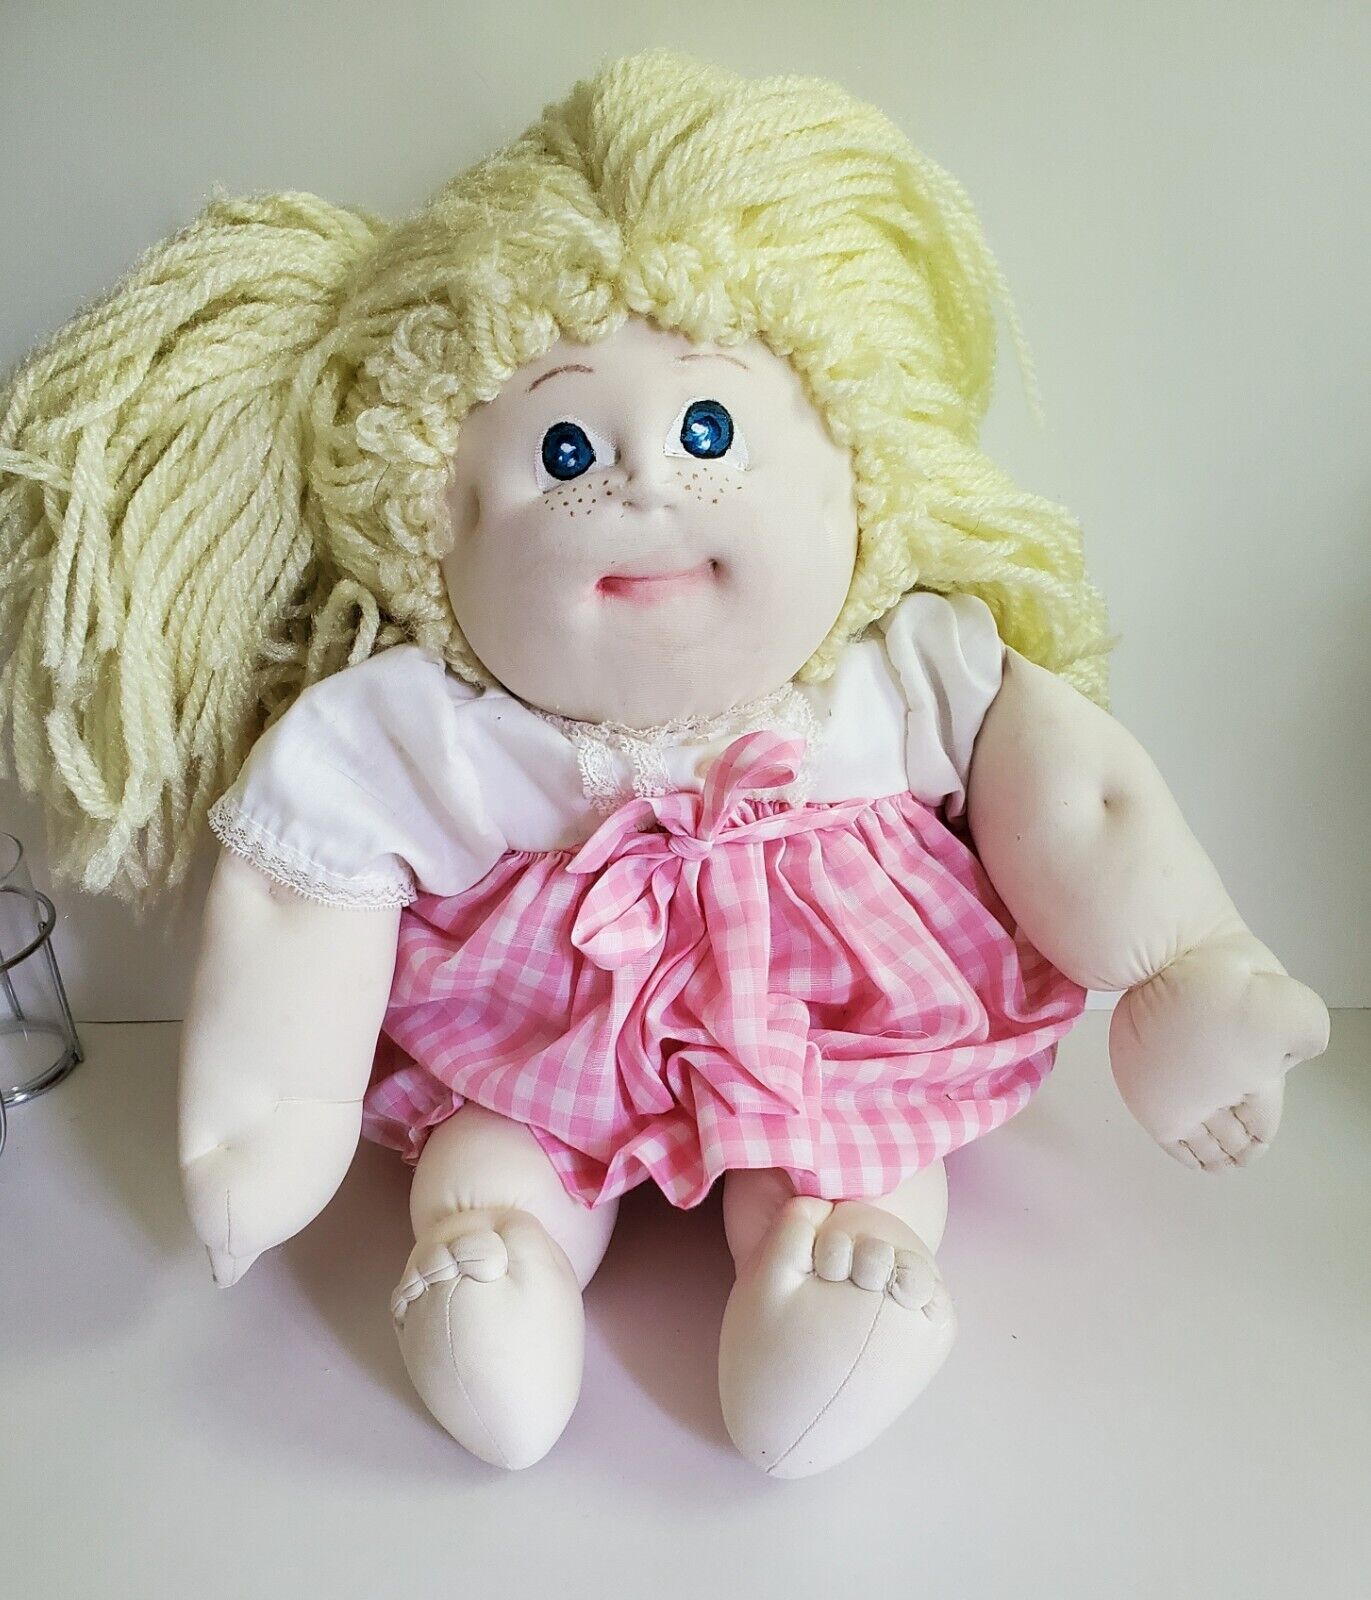 Handmade Soft Sculpture Doll Artist Initialed Large Folk Art Vintage Blonde Hair